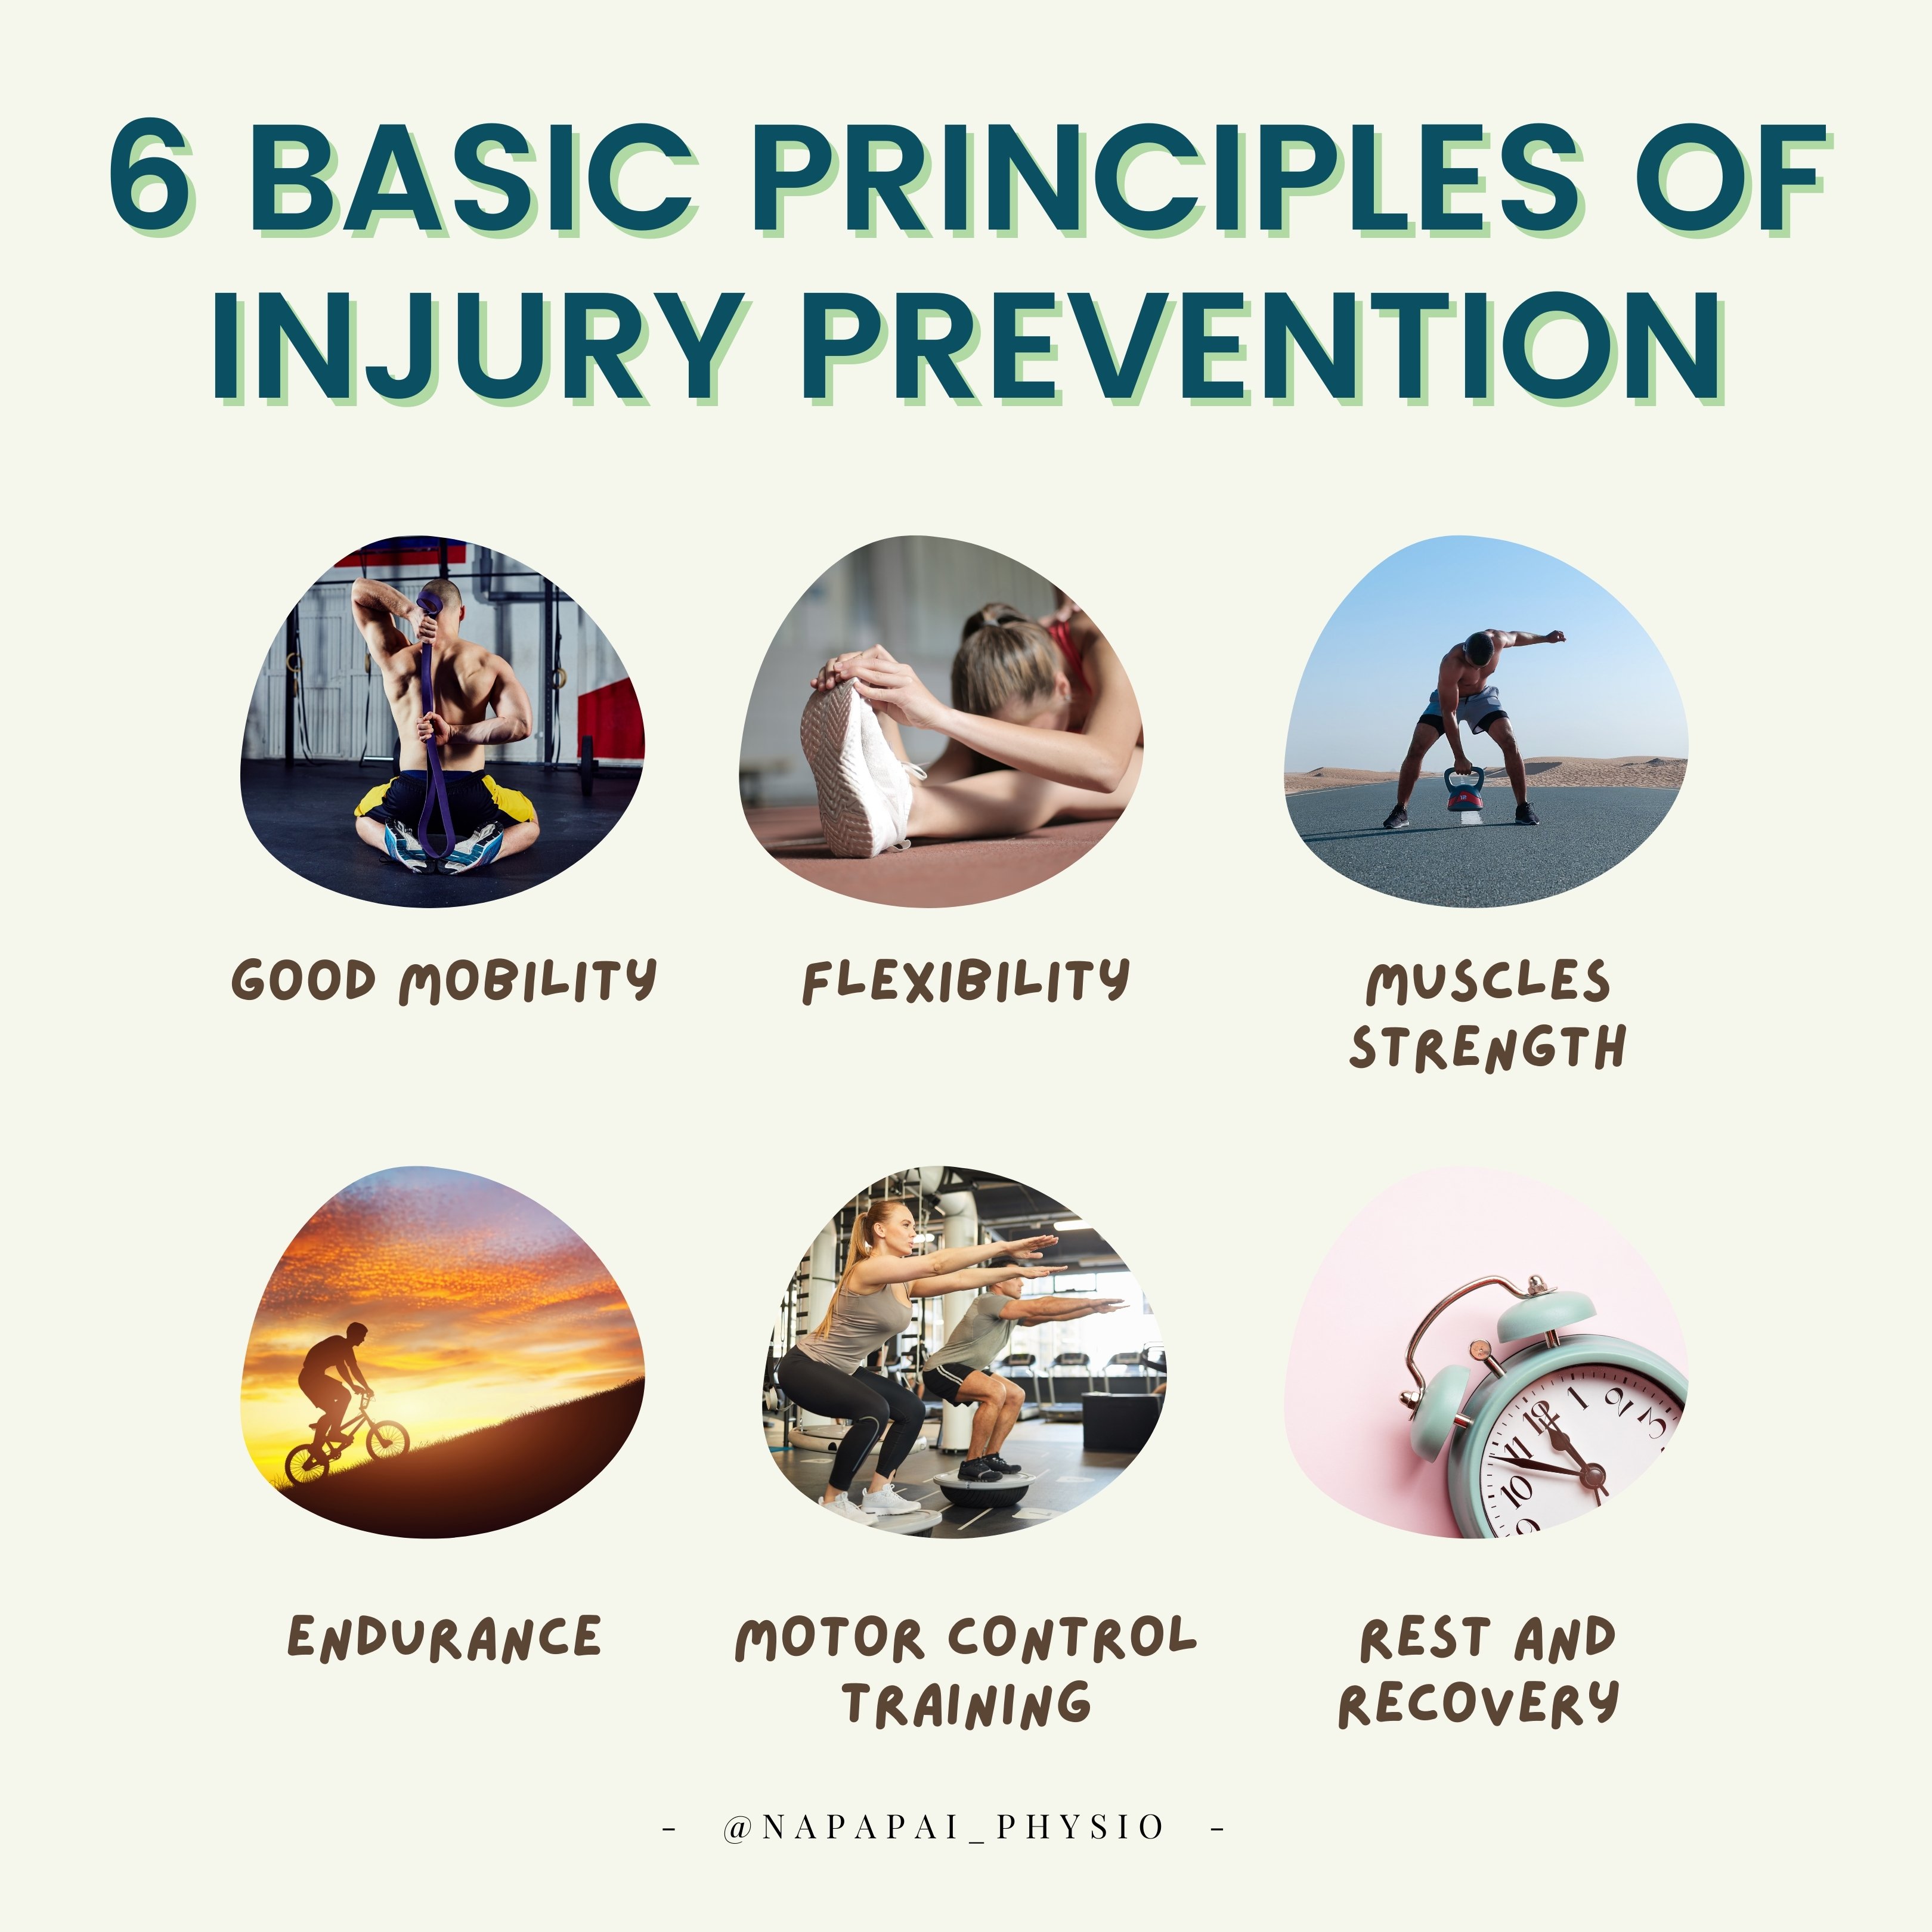 Injury prevention methods